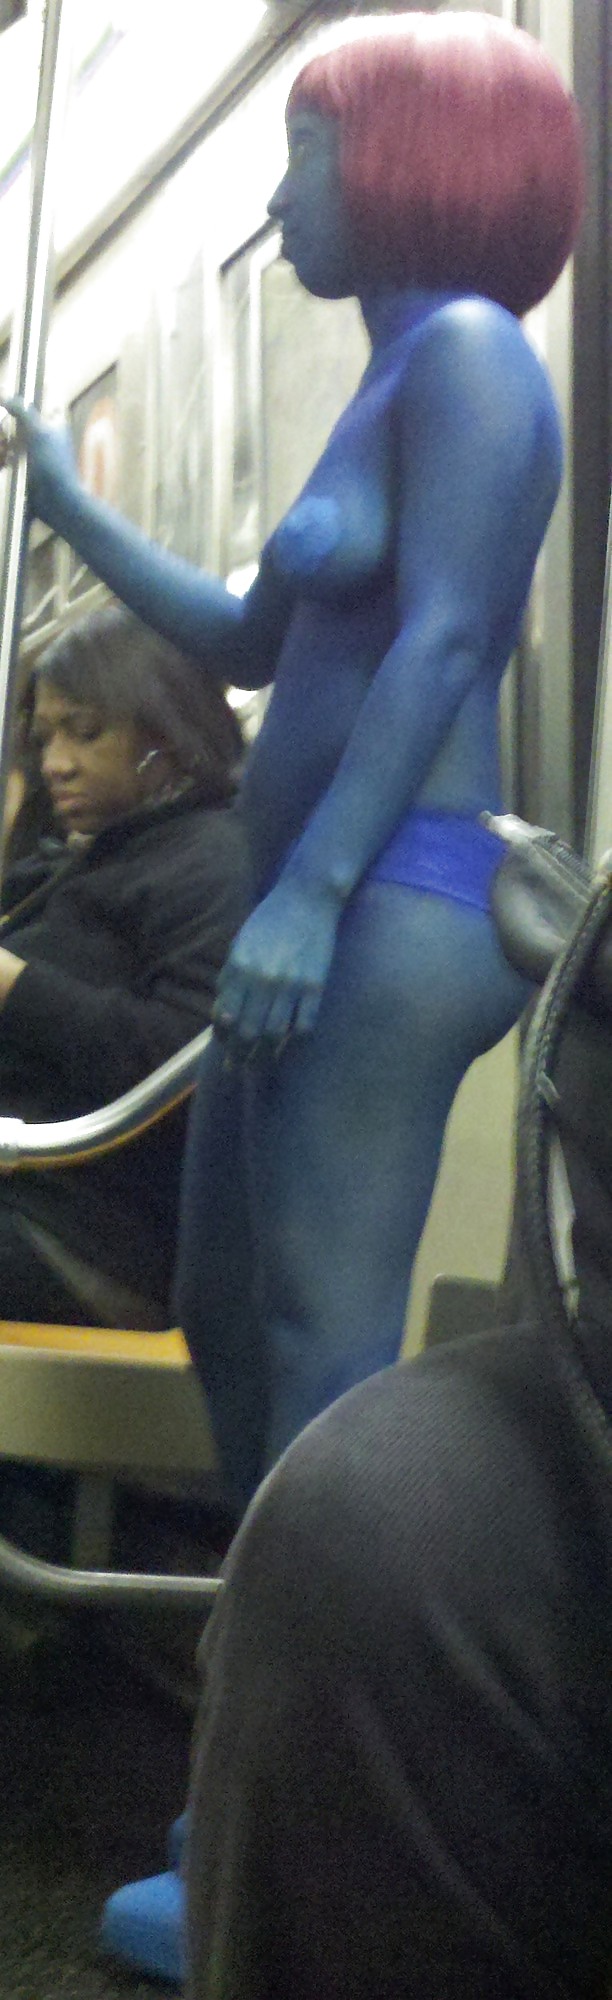 New York Subway Girls 113 Halloween Avatar Girl or Mystique adult photos